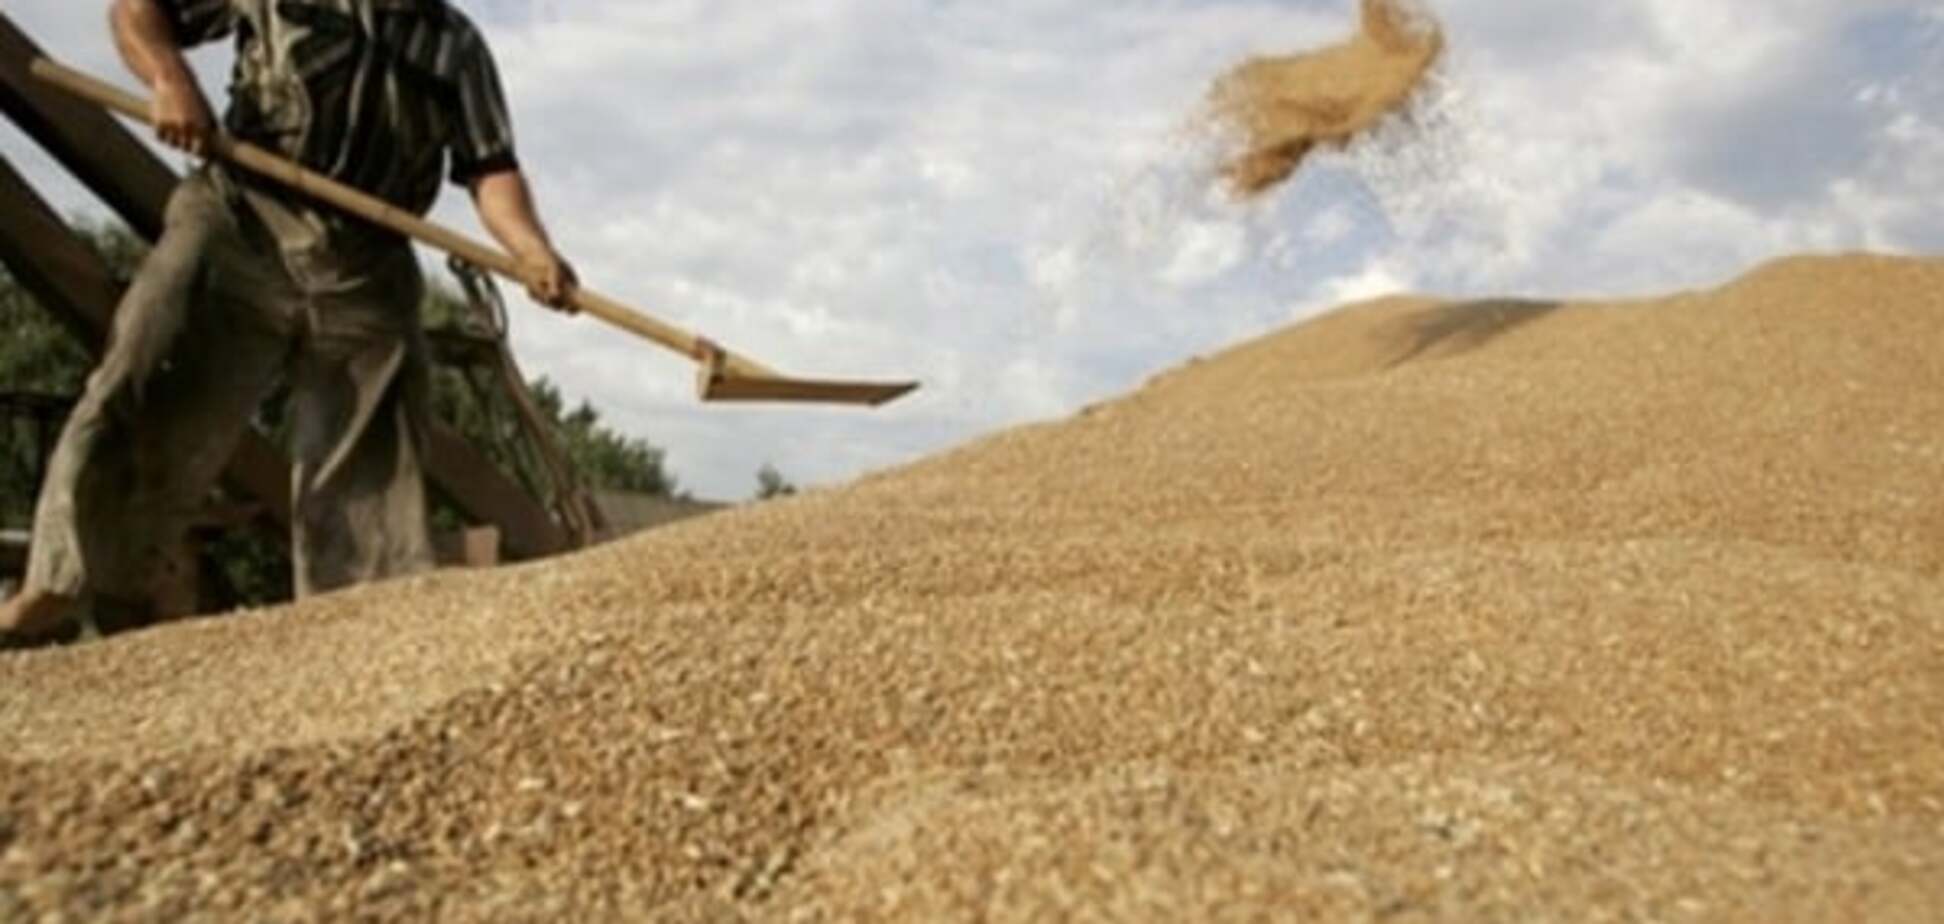 Україна рекордно збільшила експорт зерна - Павленко